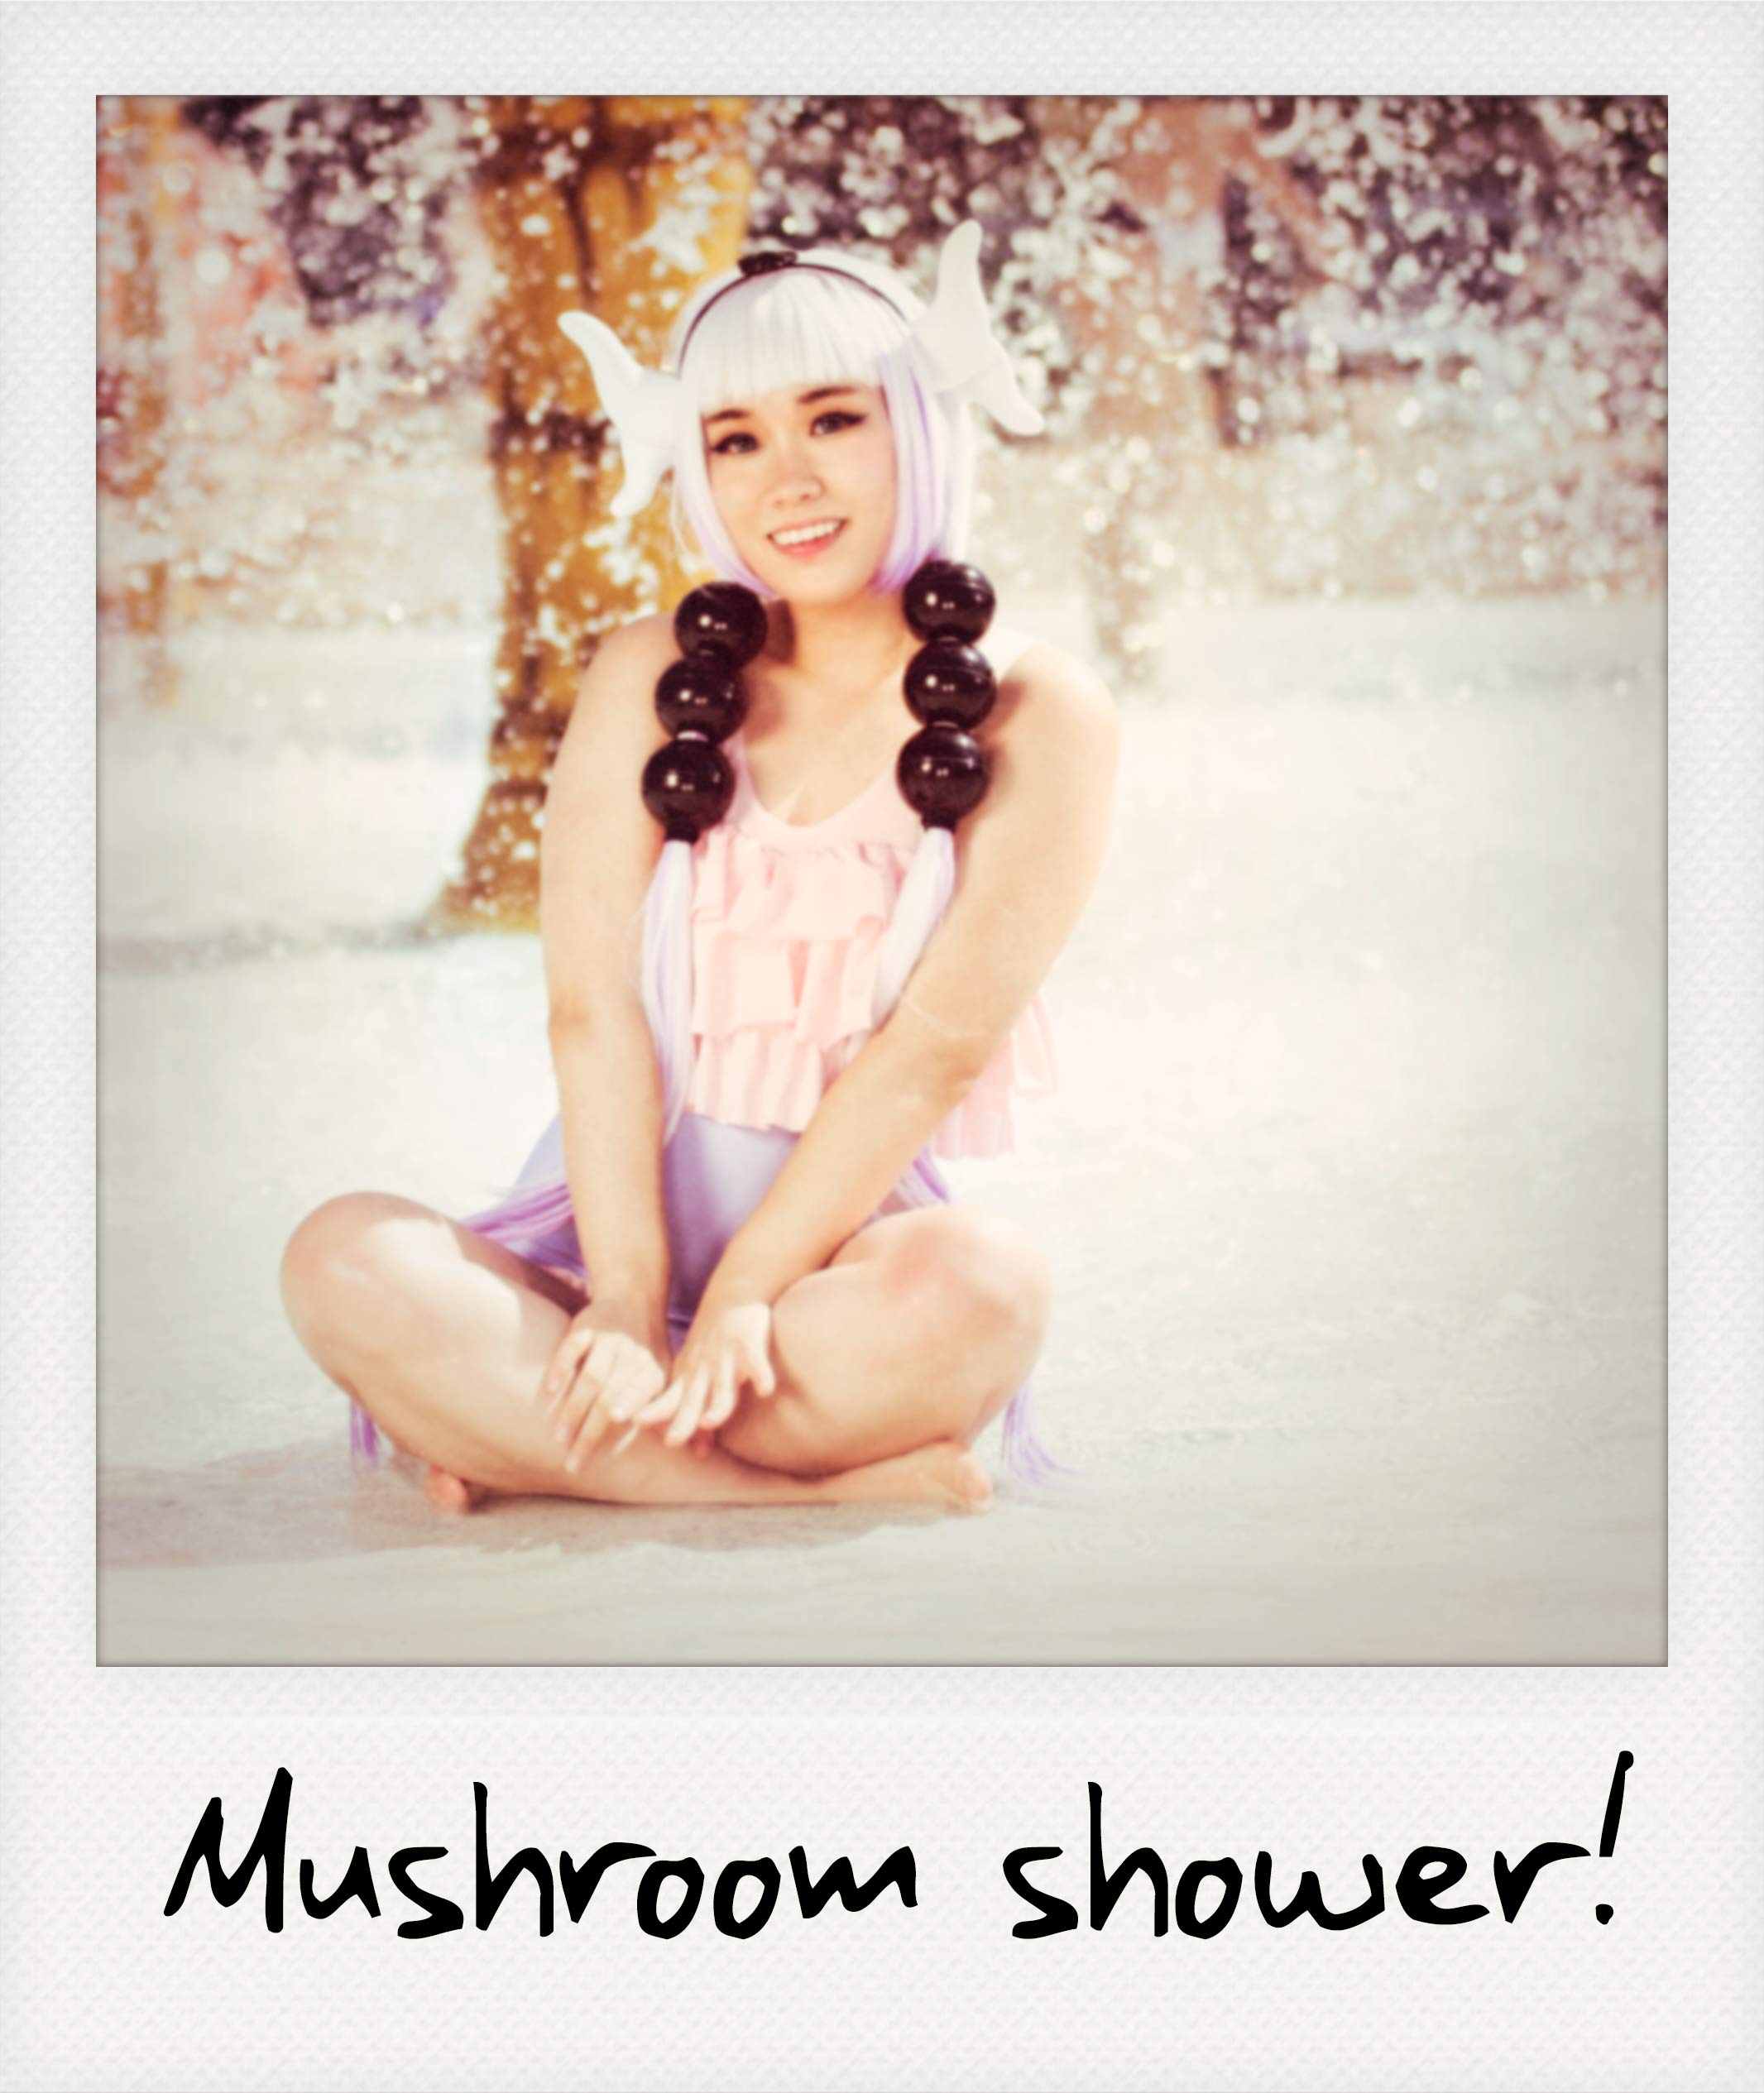 Mushroom shower!